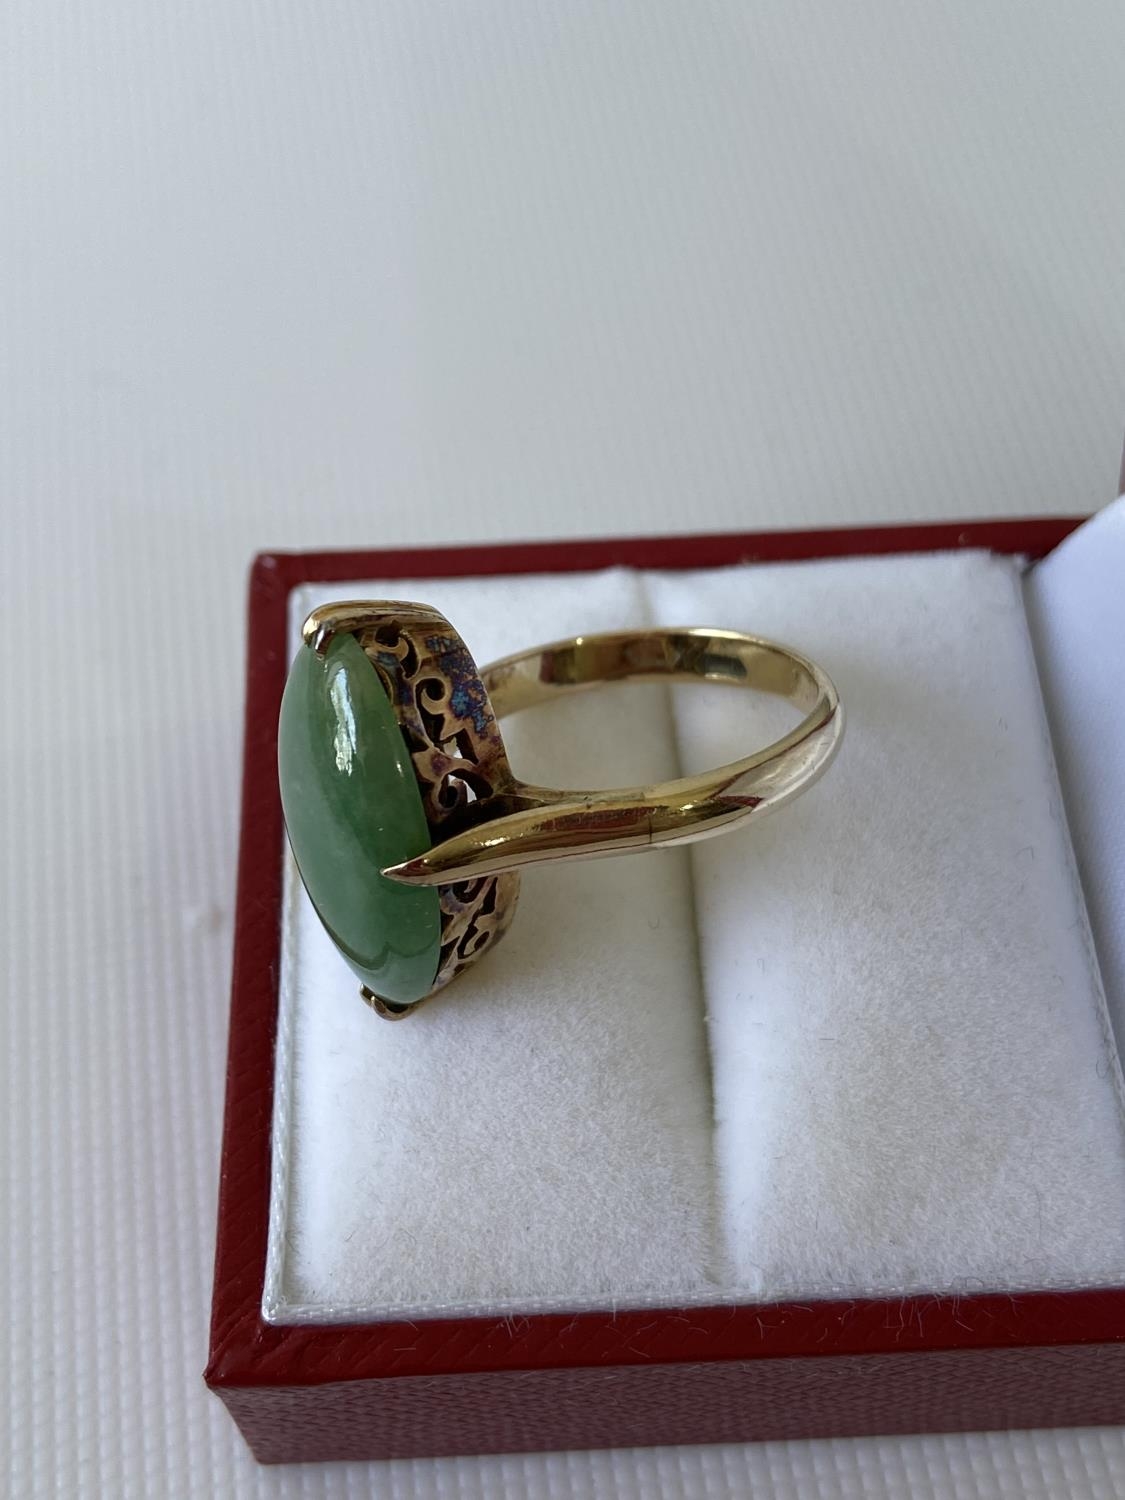 An 18ct gold & jade ring [5.44g] [M 1/2] stamped [18k] - Image 8 of 10